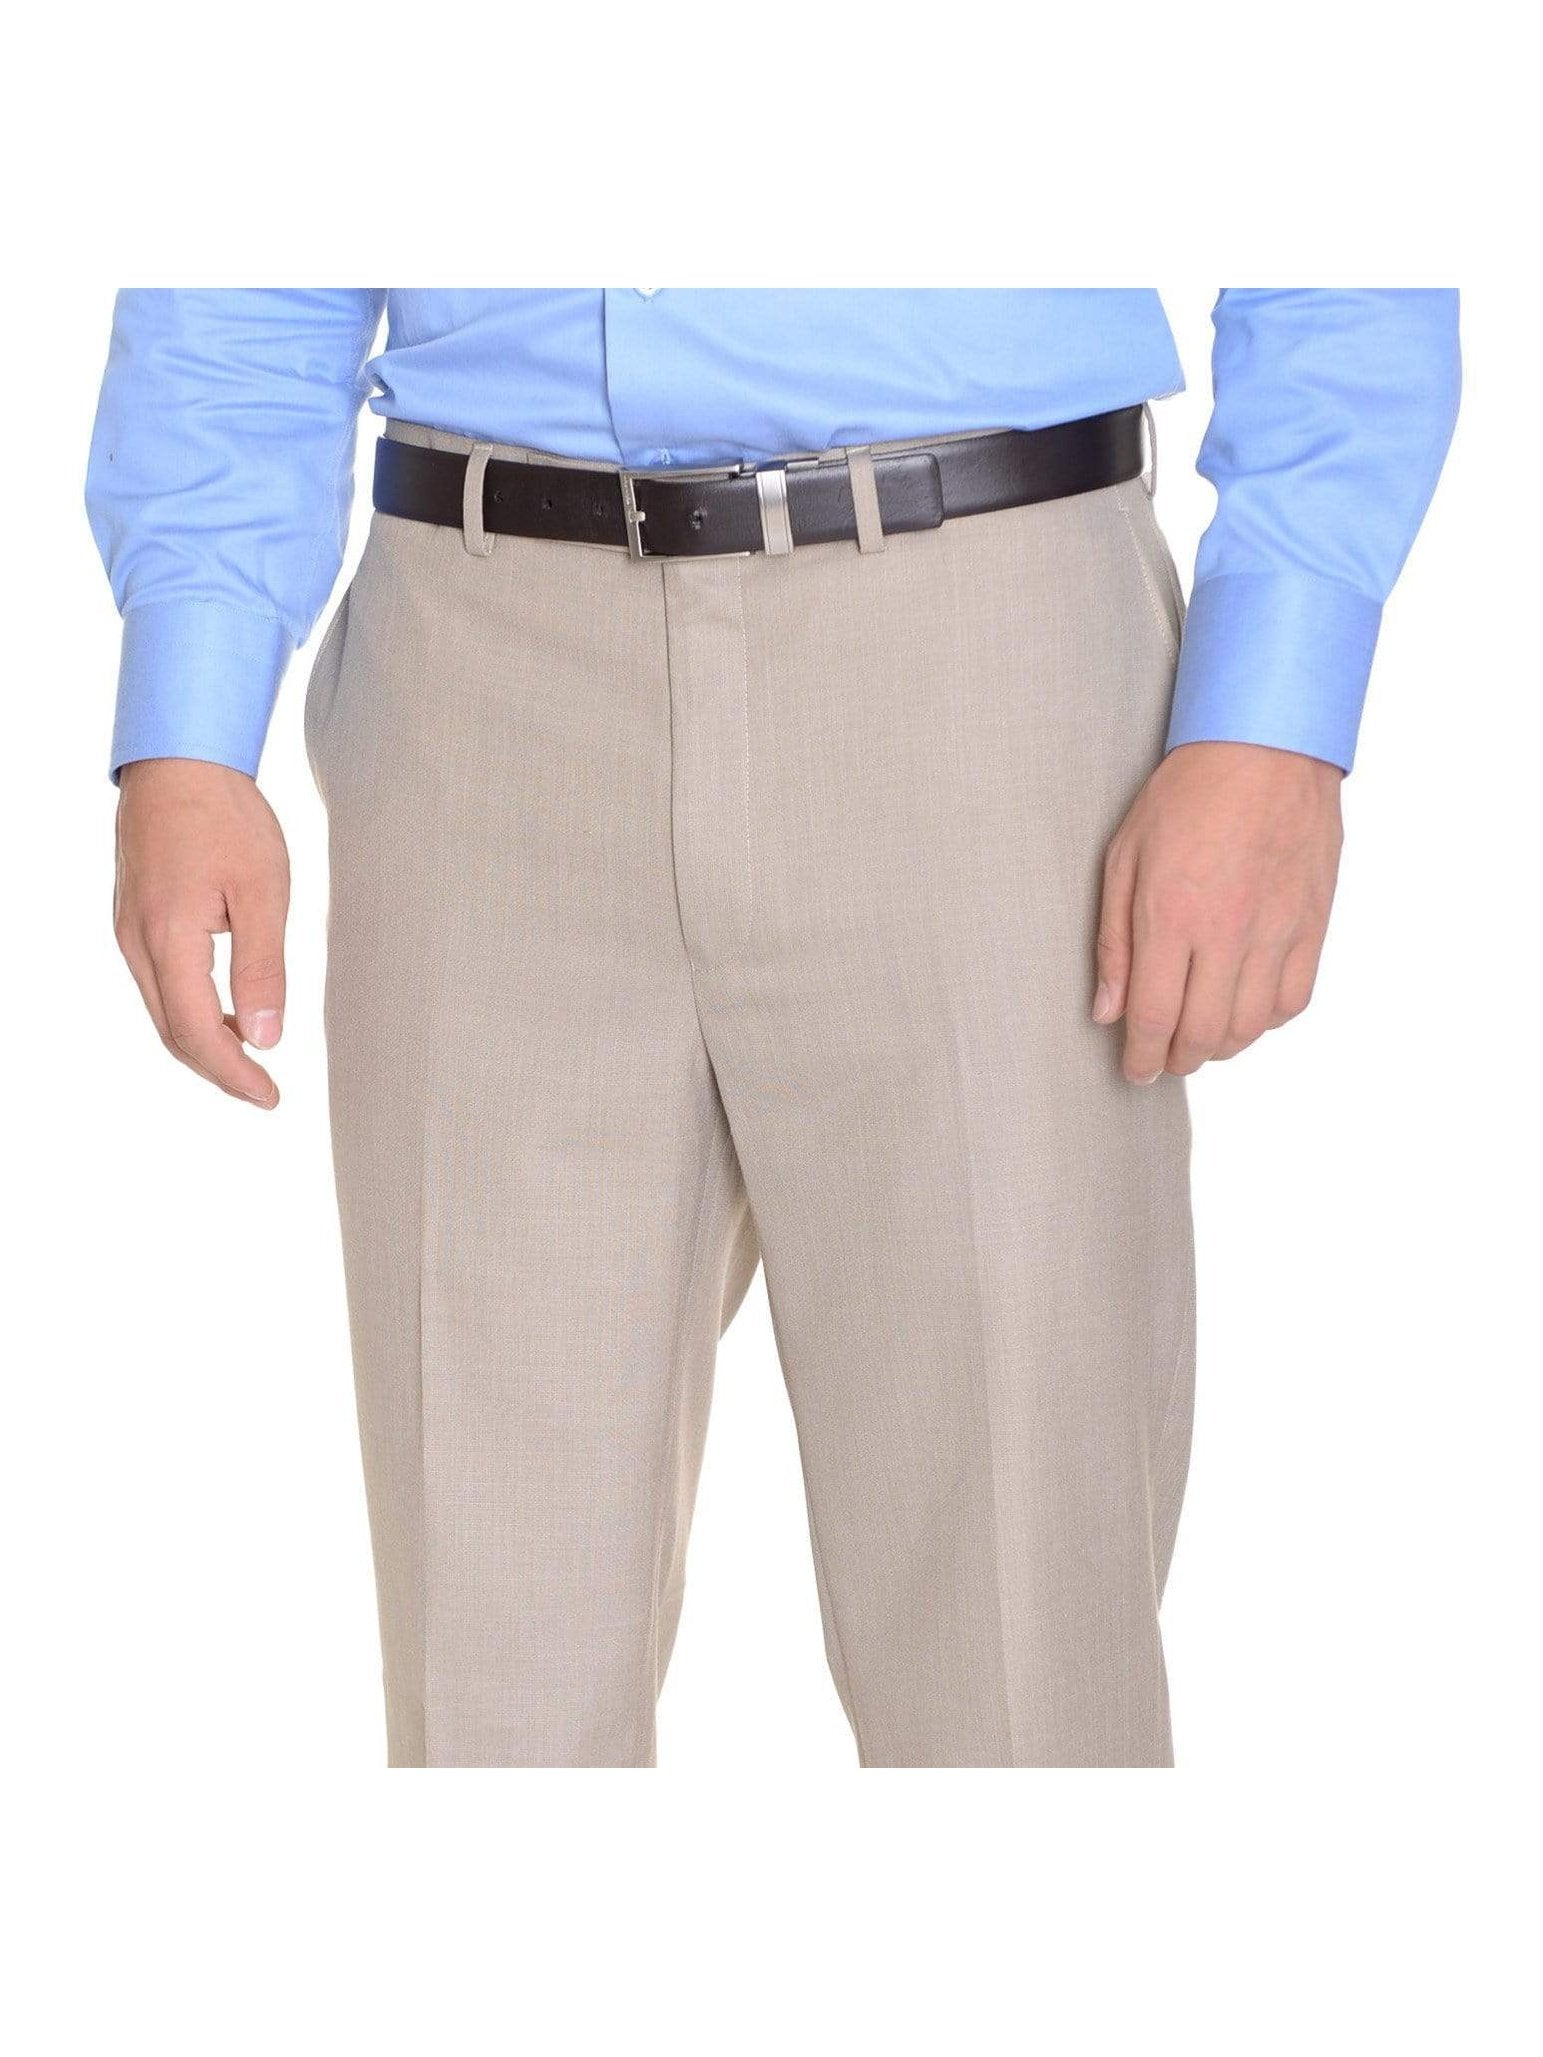 Shop Mens Bottoms Pants Shorts  More  Calvin Klein